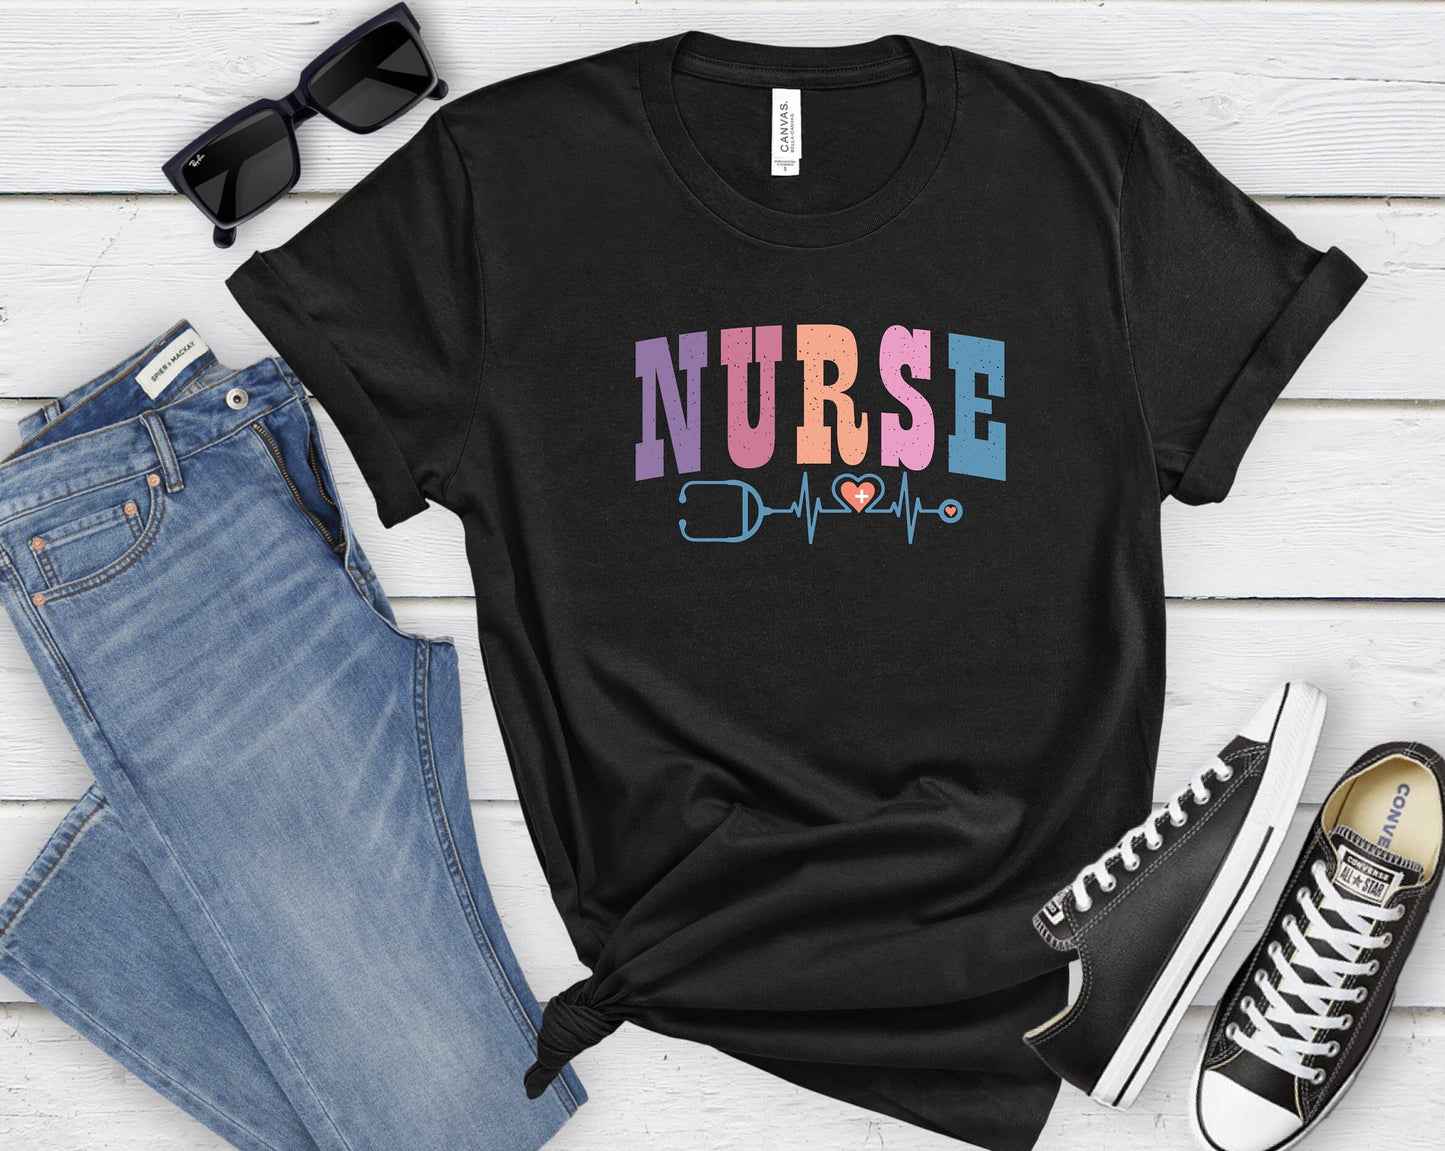 Nurse Color Font Shirt, I love nurses shirt, Awesome gift shirt for nurses, gift shirt for a special nurse, Thank you gift shirt for nurses